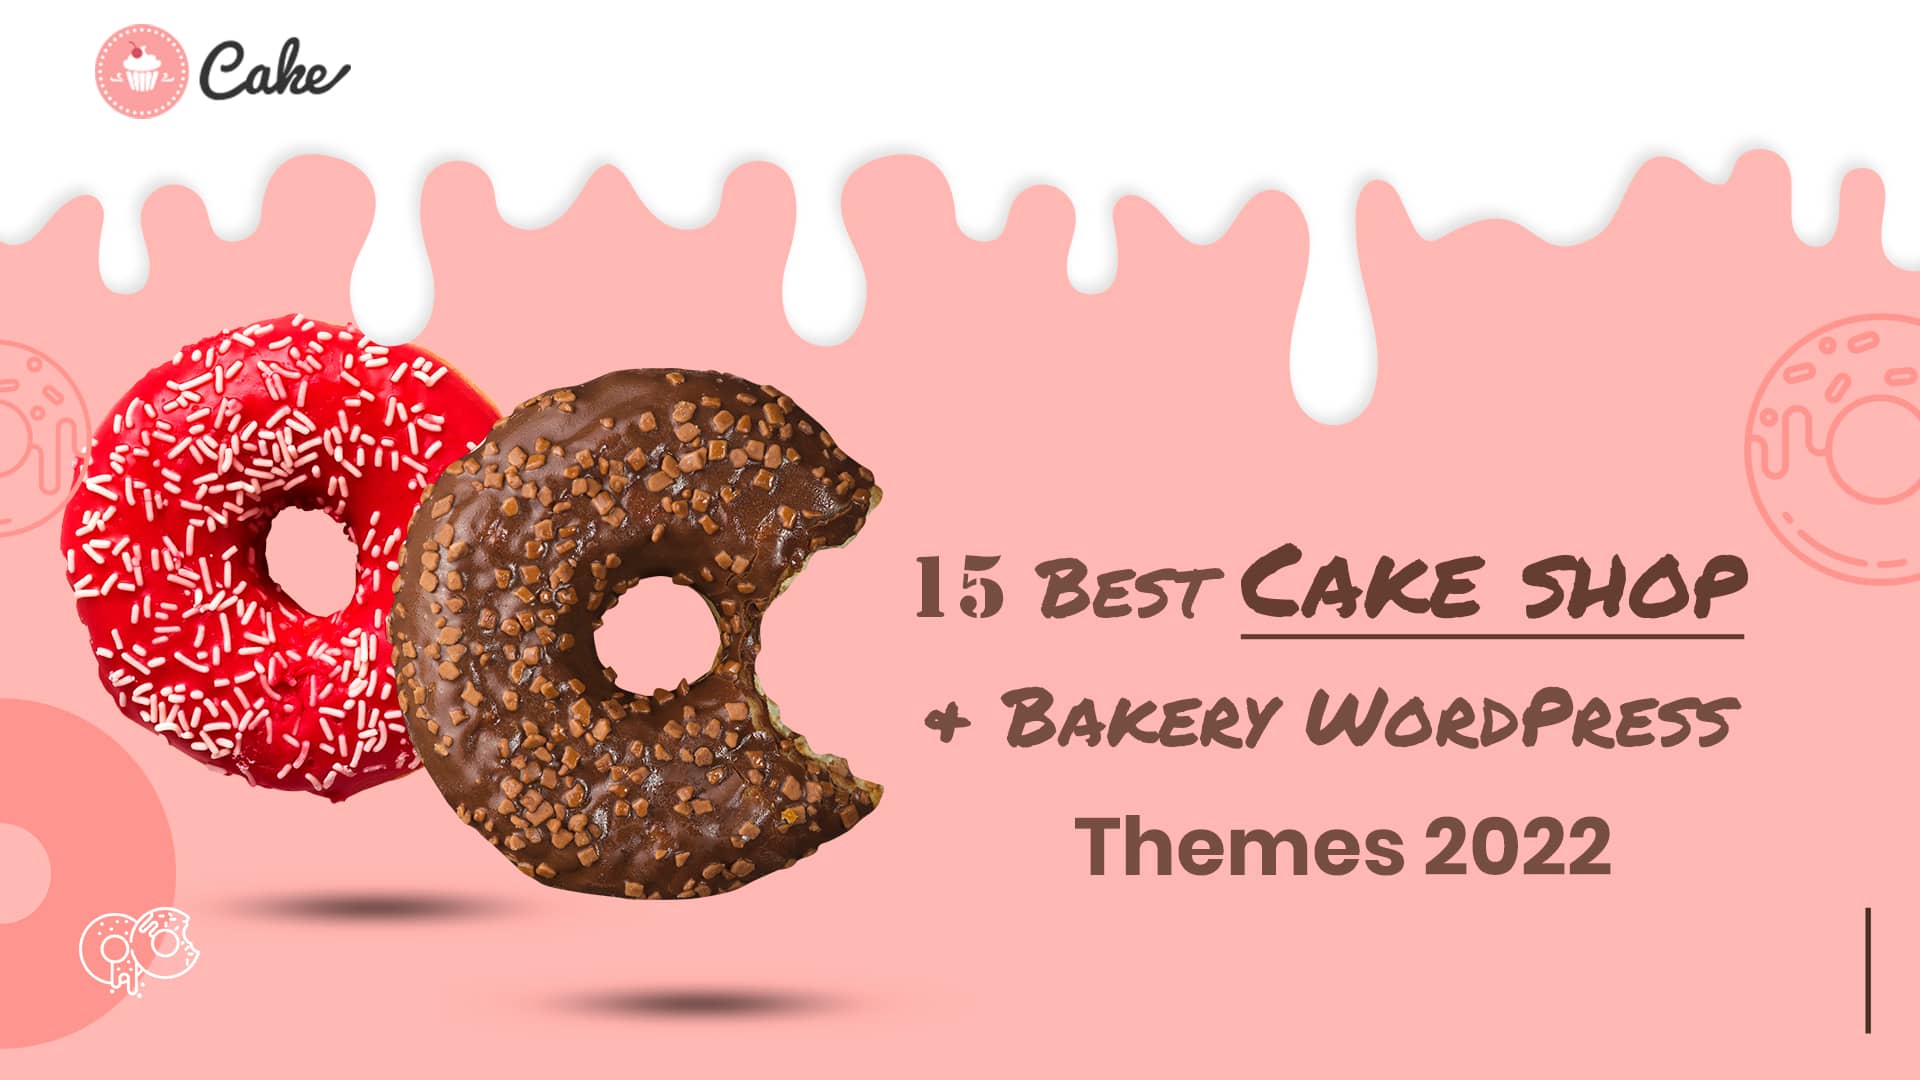 15 Best Cake Shop & Bakery WordPress Themes 2022